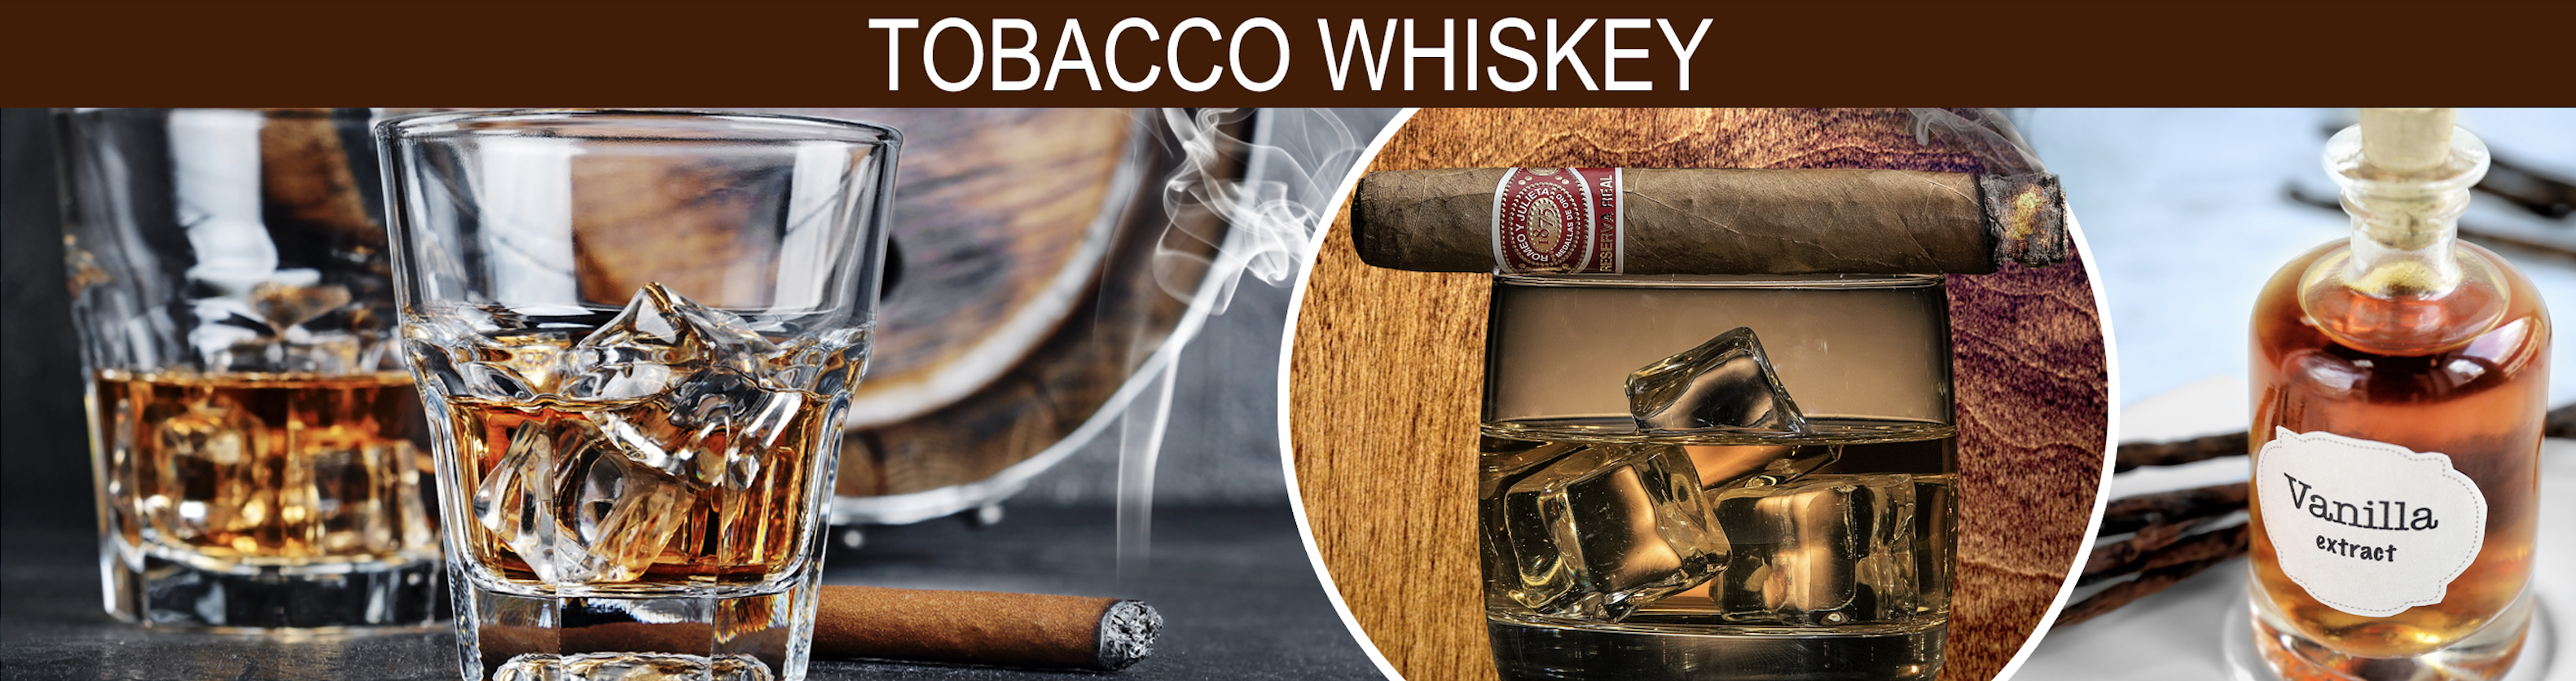 Banner image of tobacco, whiskey, vanilla, wood